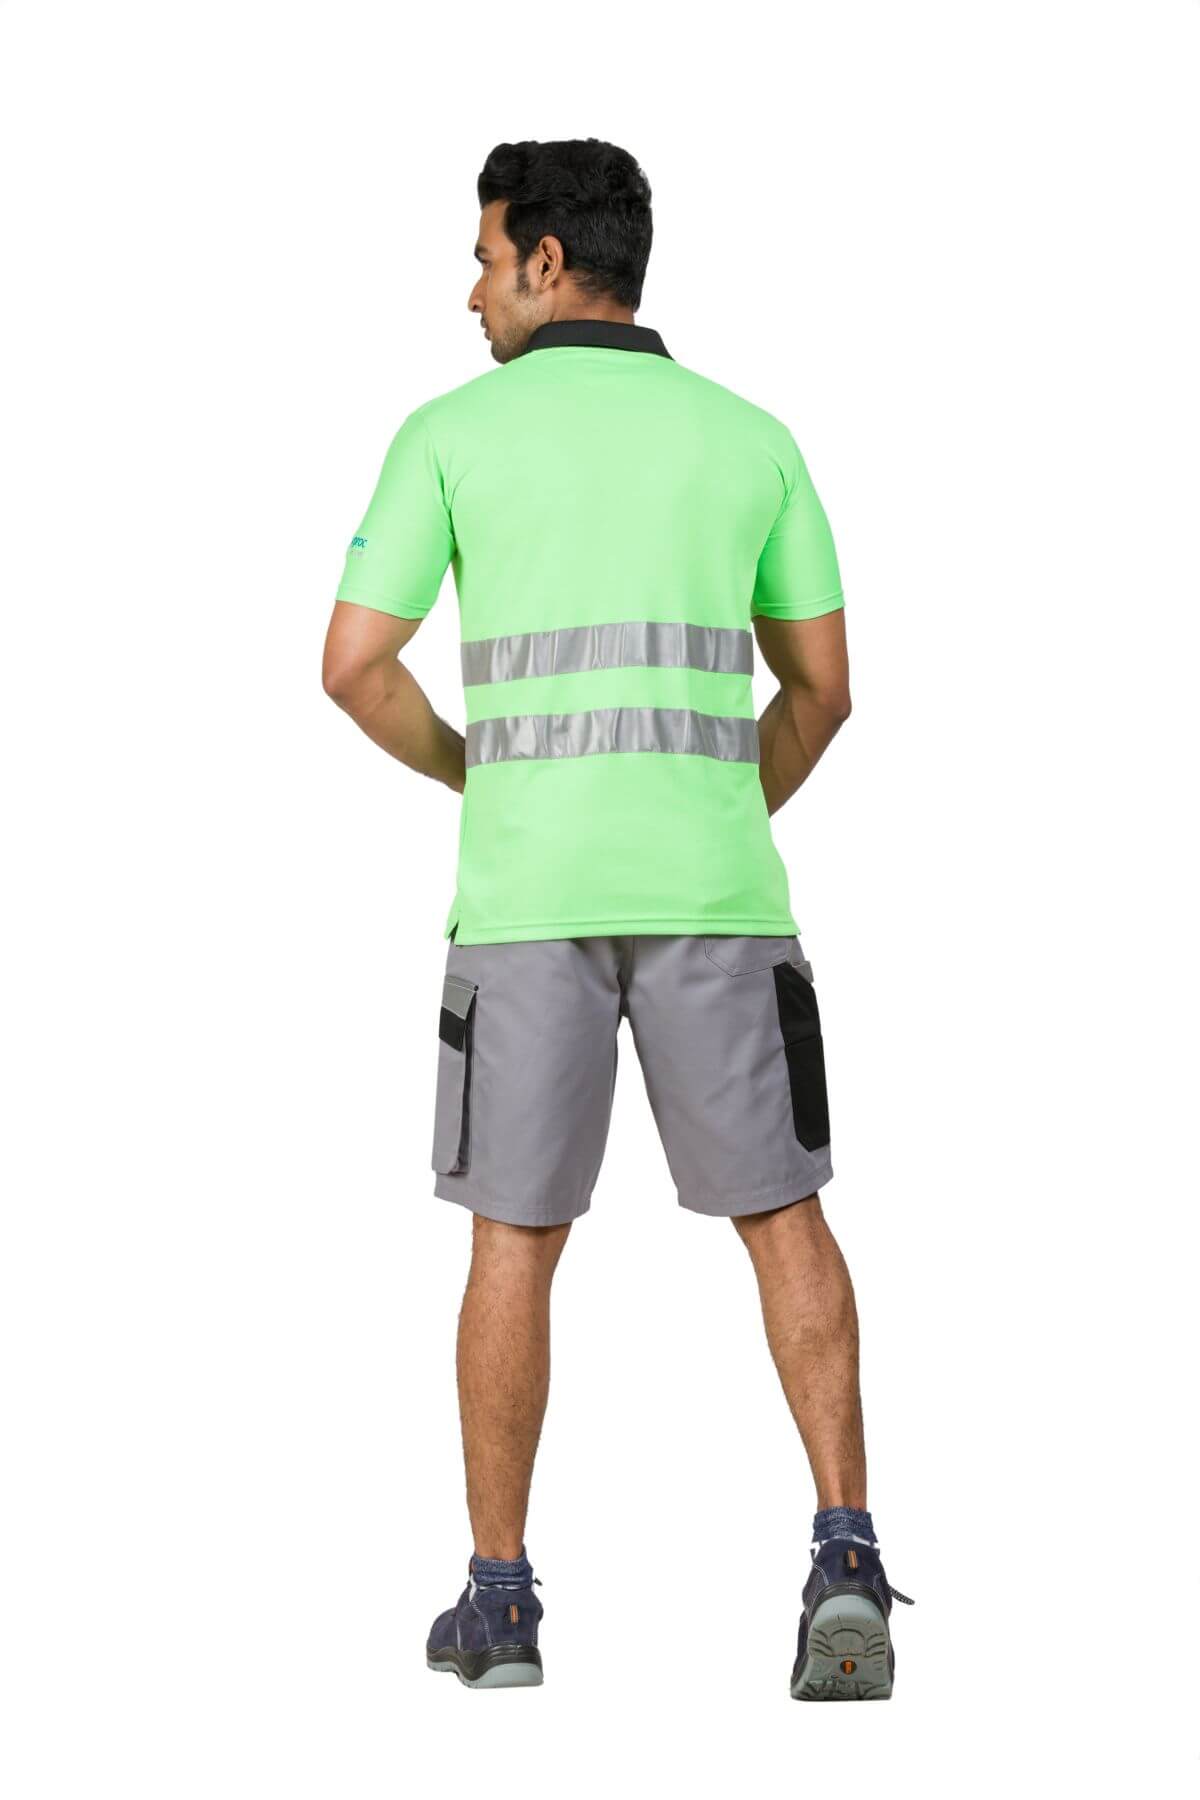 AS/NZS 4602.1:2011 Standards Compliant Light-Weight Lime Green polo T-shirt